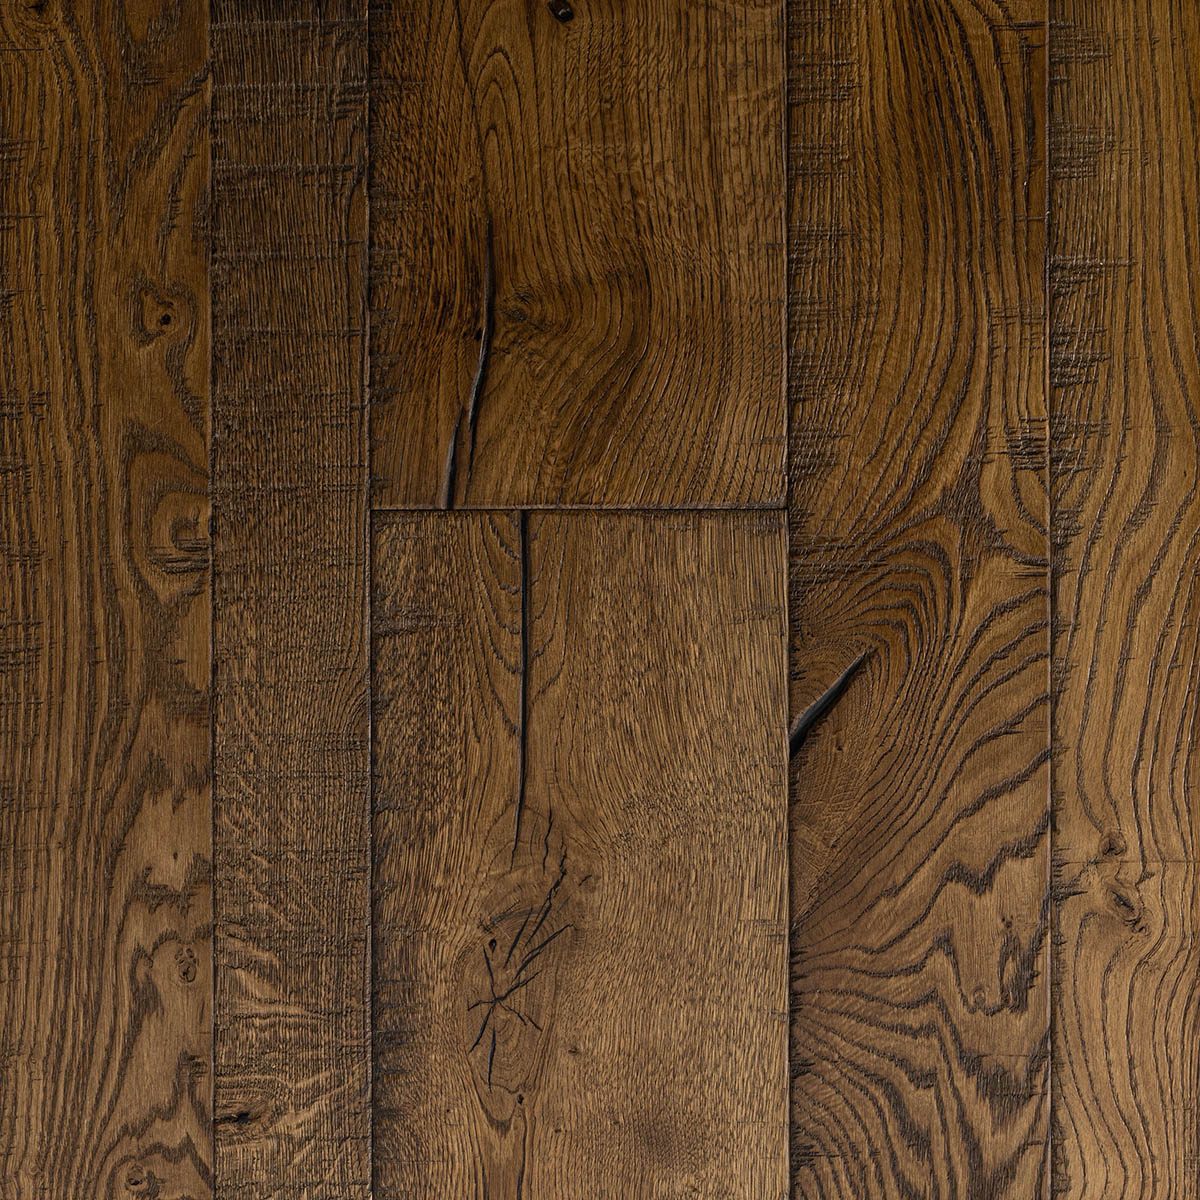 Bespoke solid and engineered wood flooring